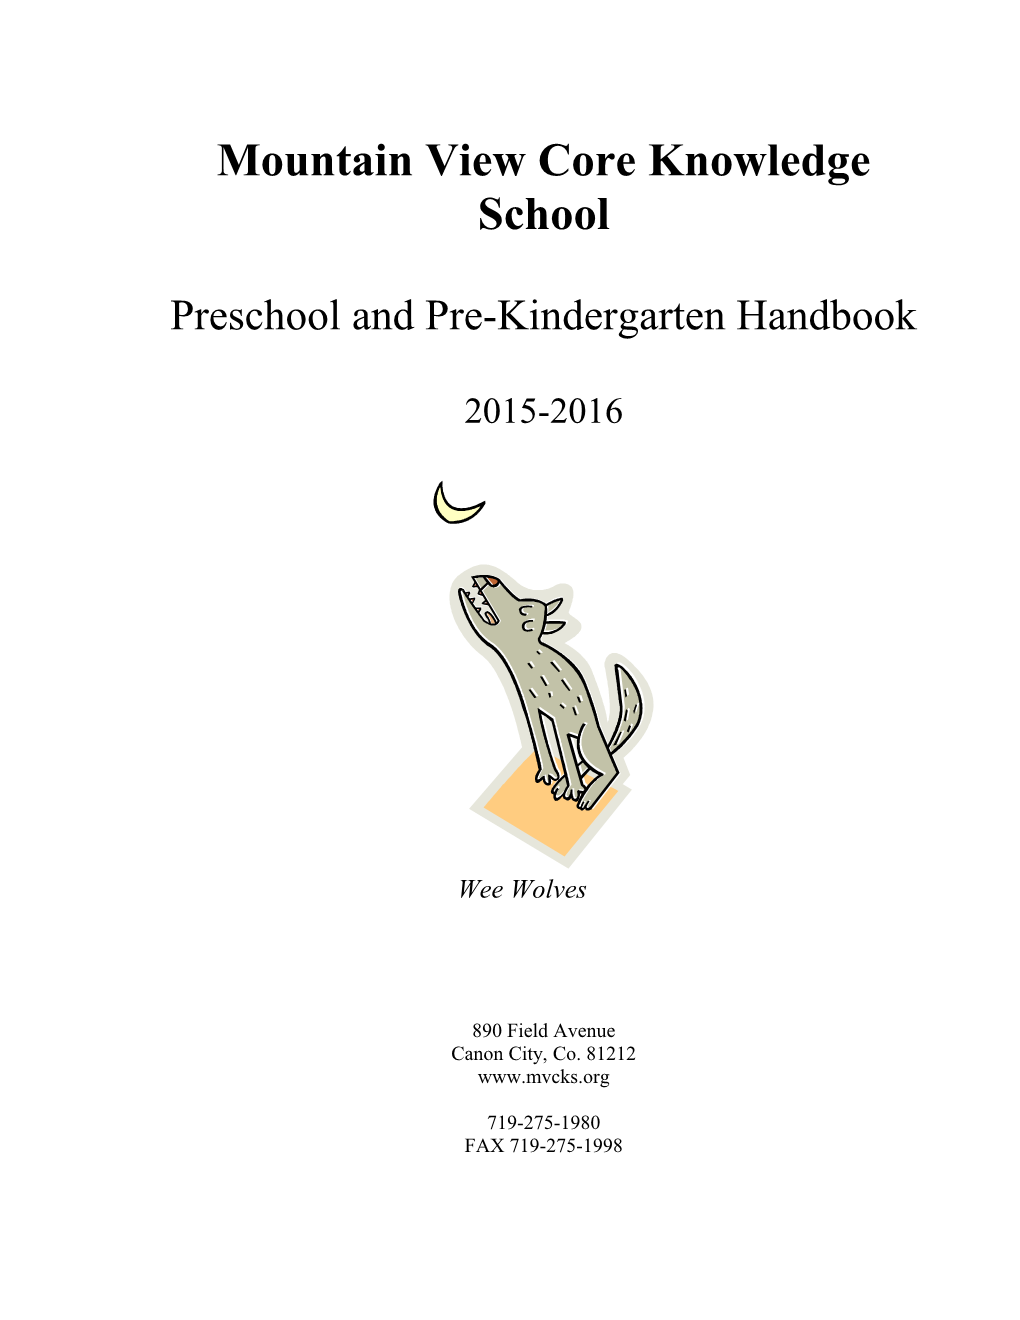 Mountain View Core Knowledge School s1